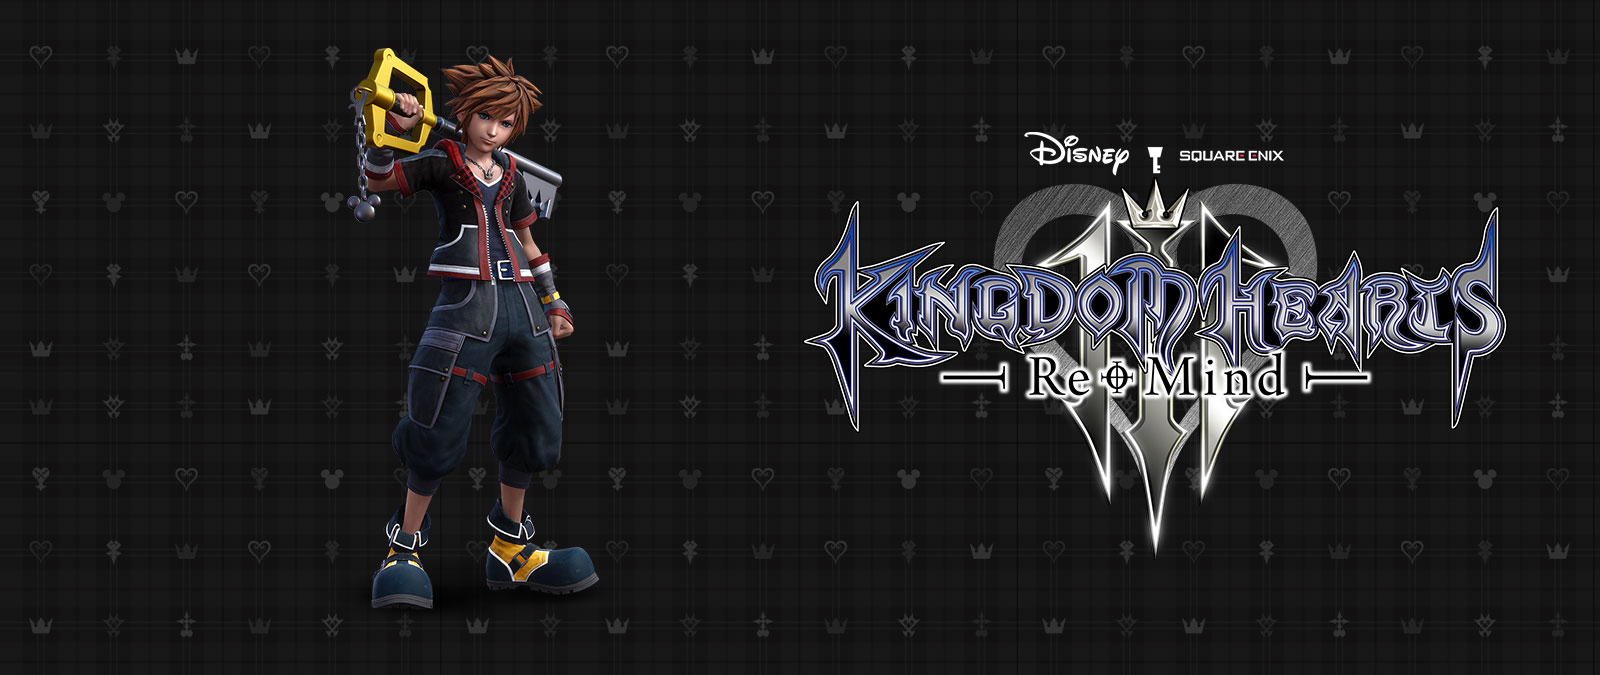 Disney Kingdom Hearts 3, Re-Mind, Sora stands against a black patterned background with the Keyblade rested on his shoulder. 